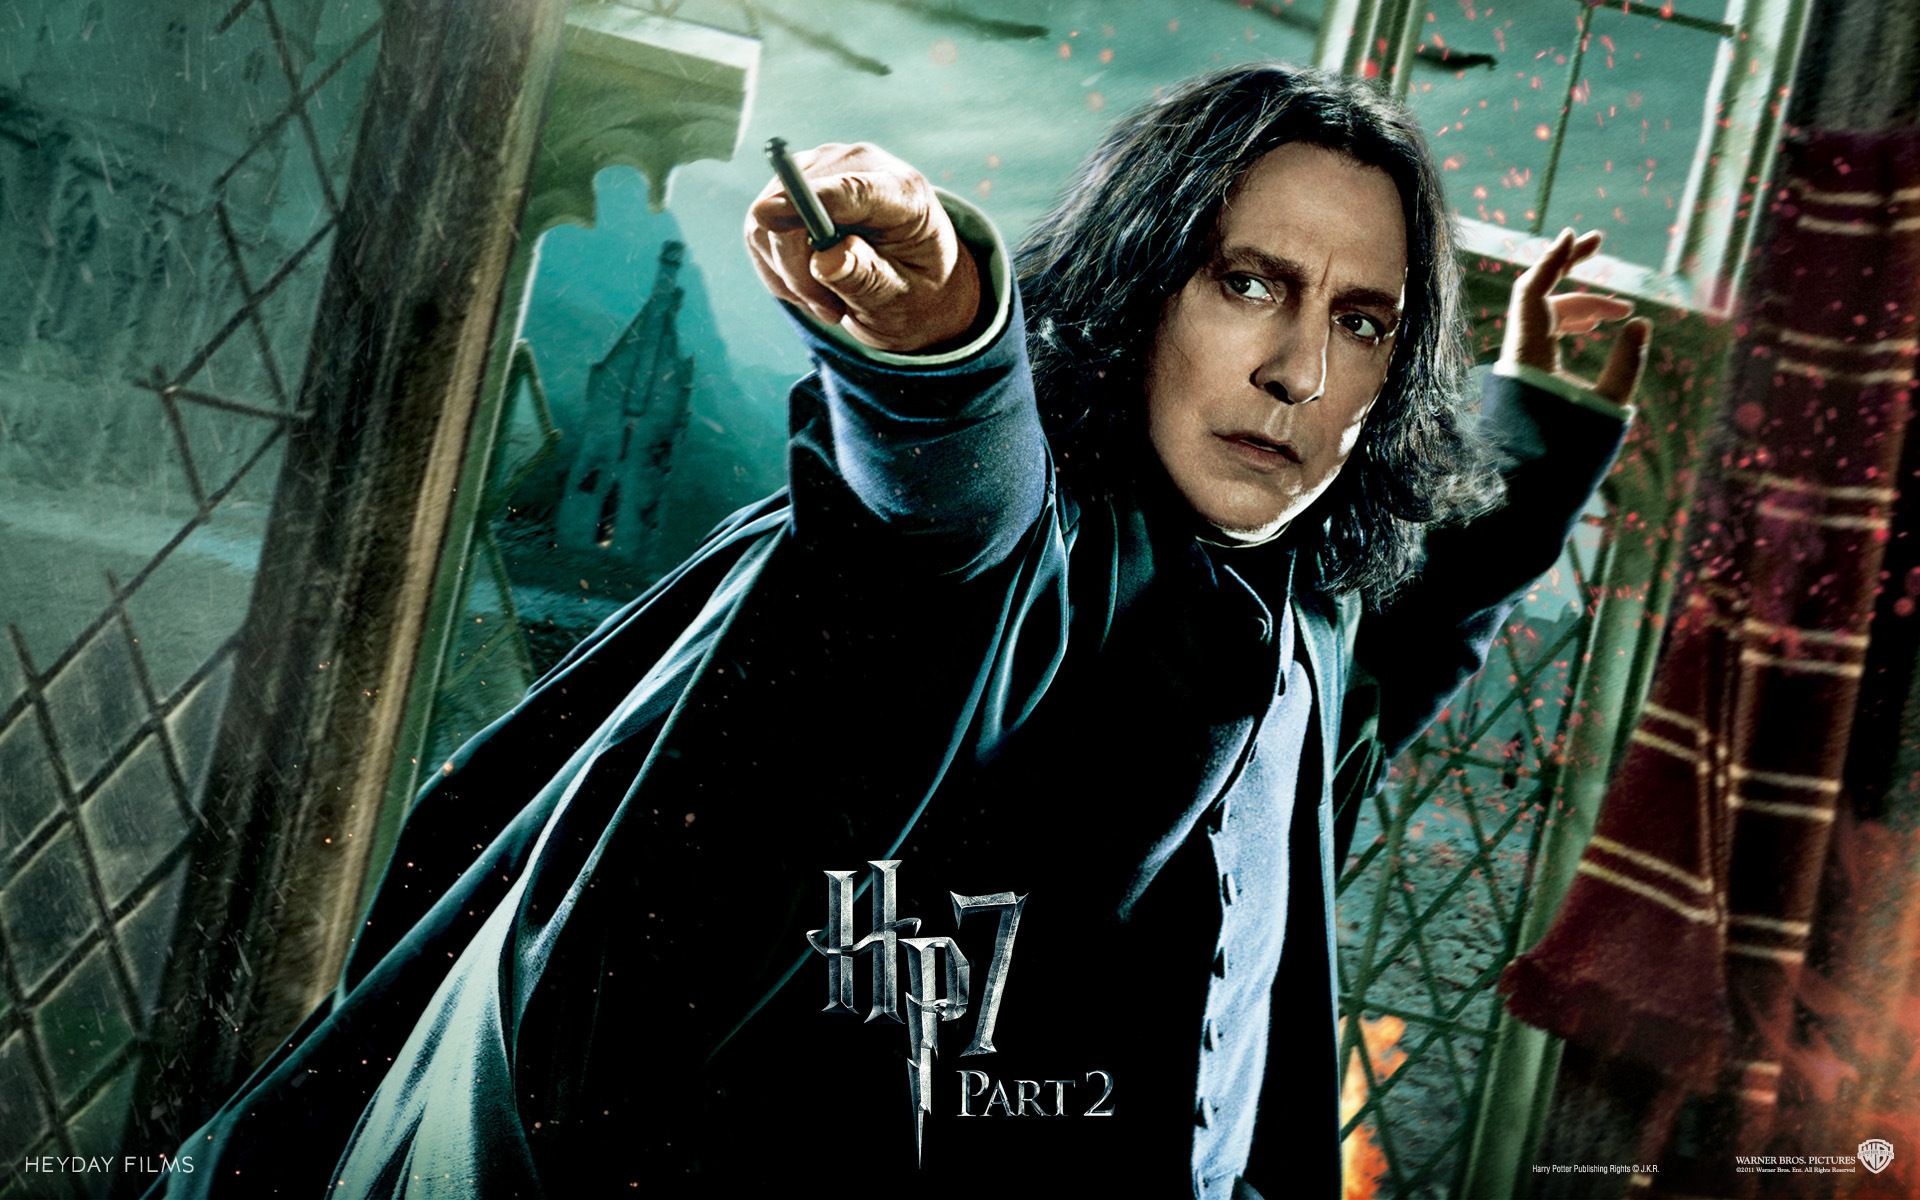 HP Wallpaper - Harry Potter Wallpaper (26099544) - Fanpop